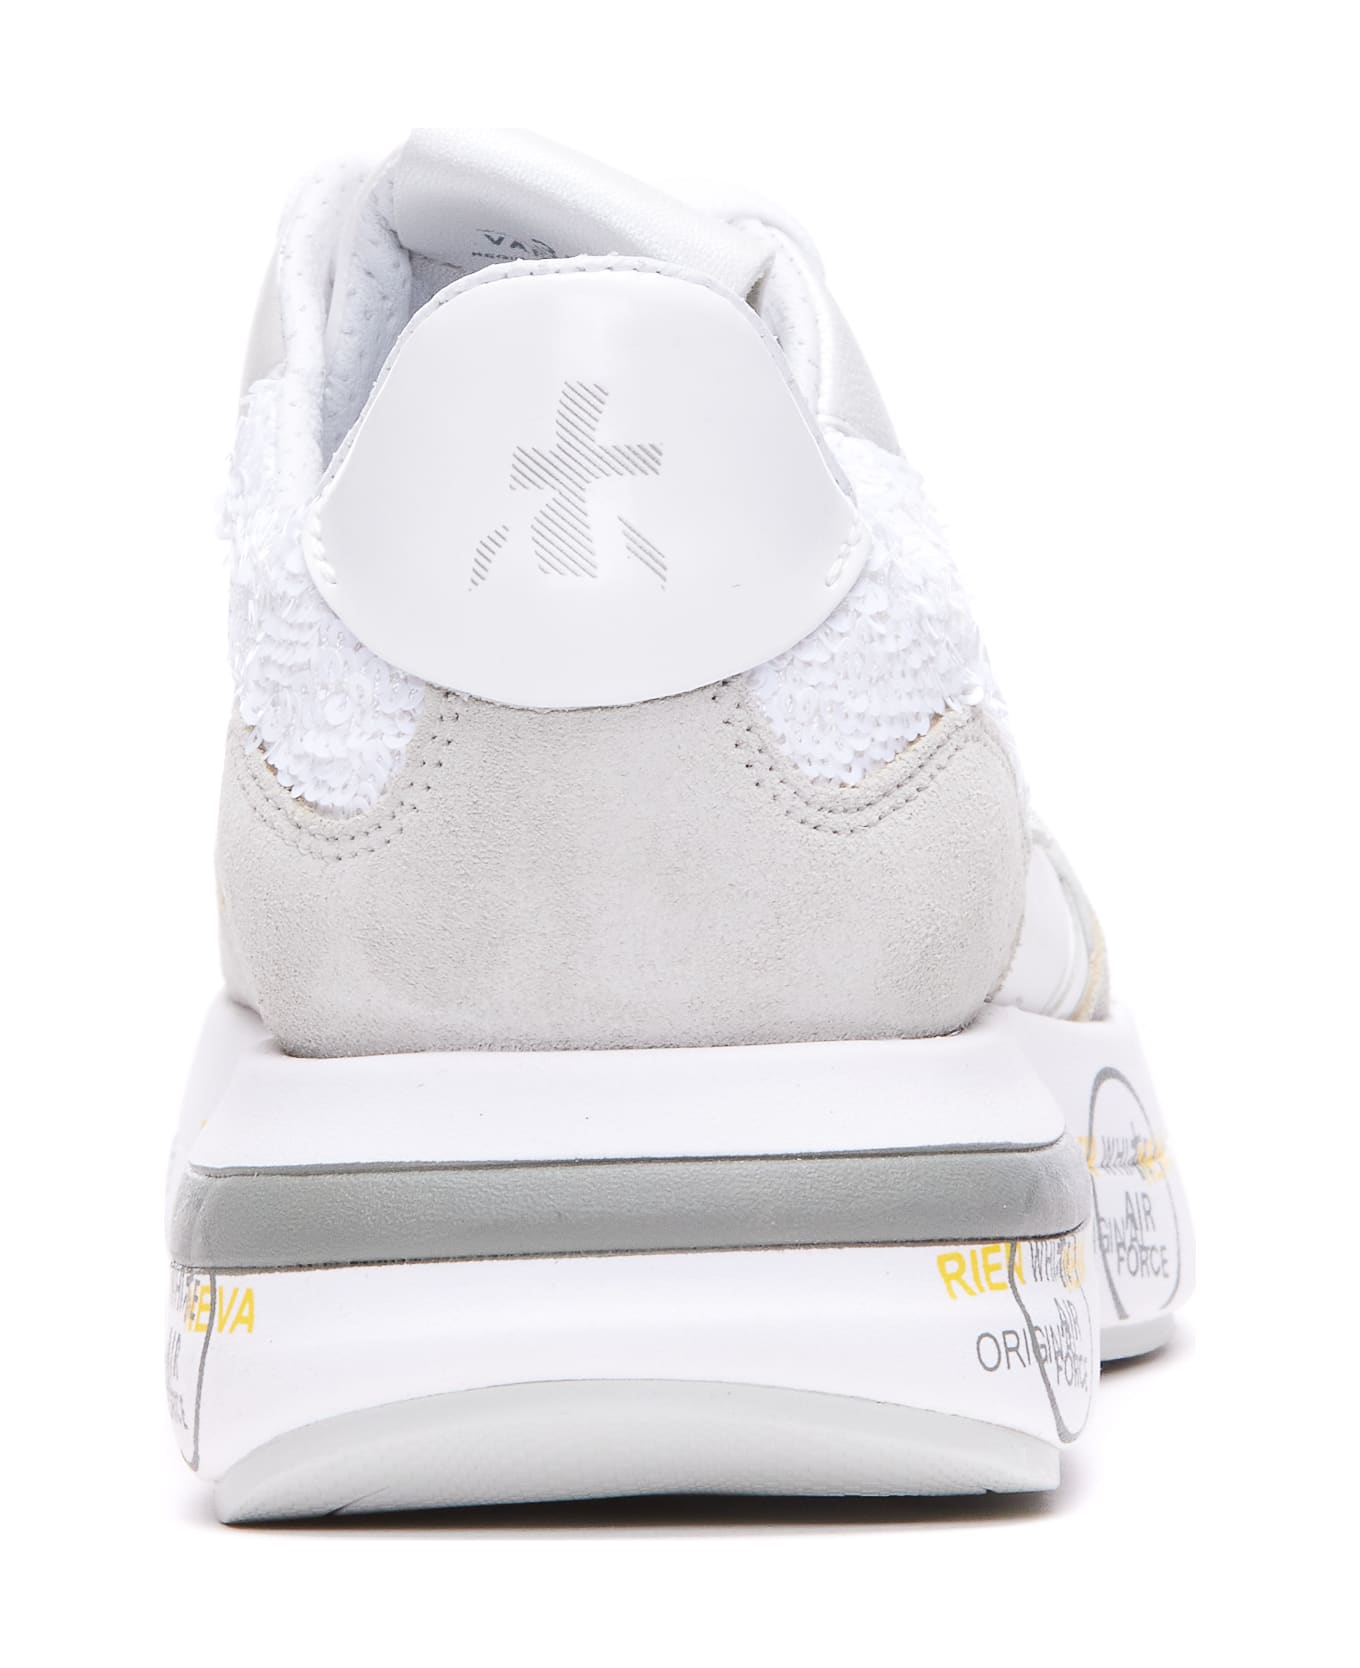 Premiata Cassie 6346 Sneakers - Bianco/beige スニーカー